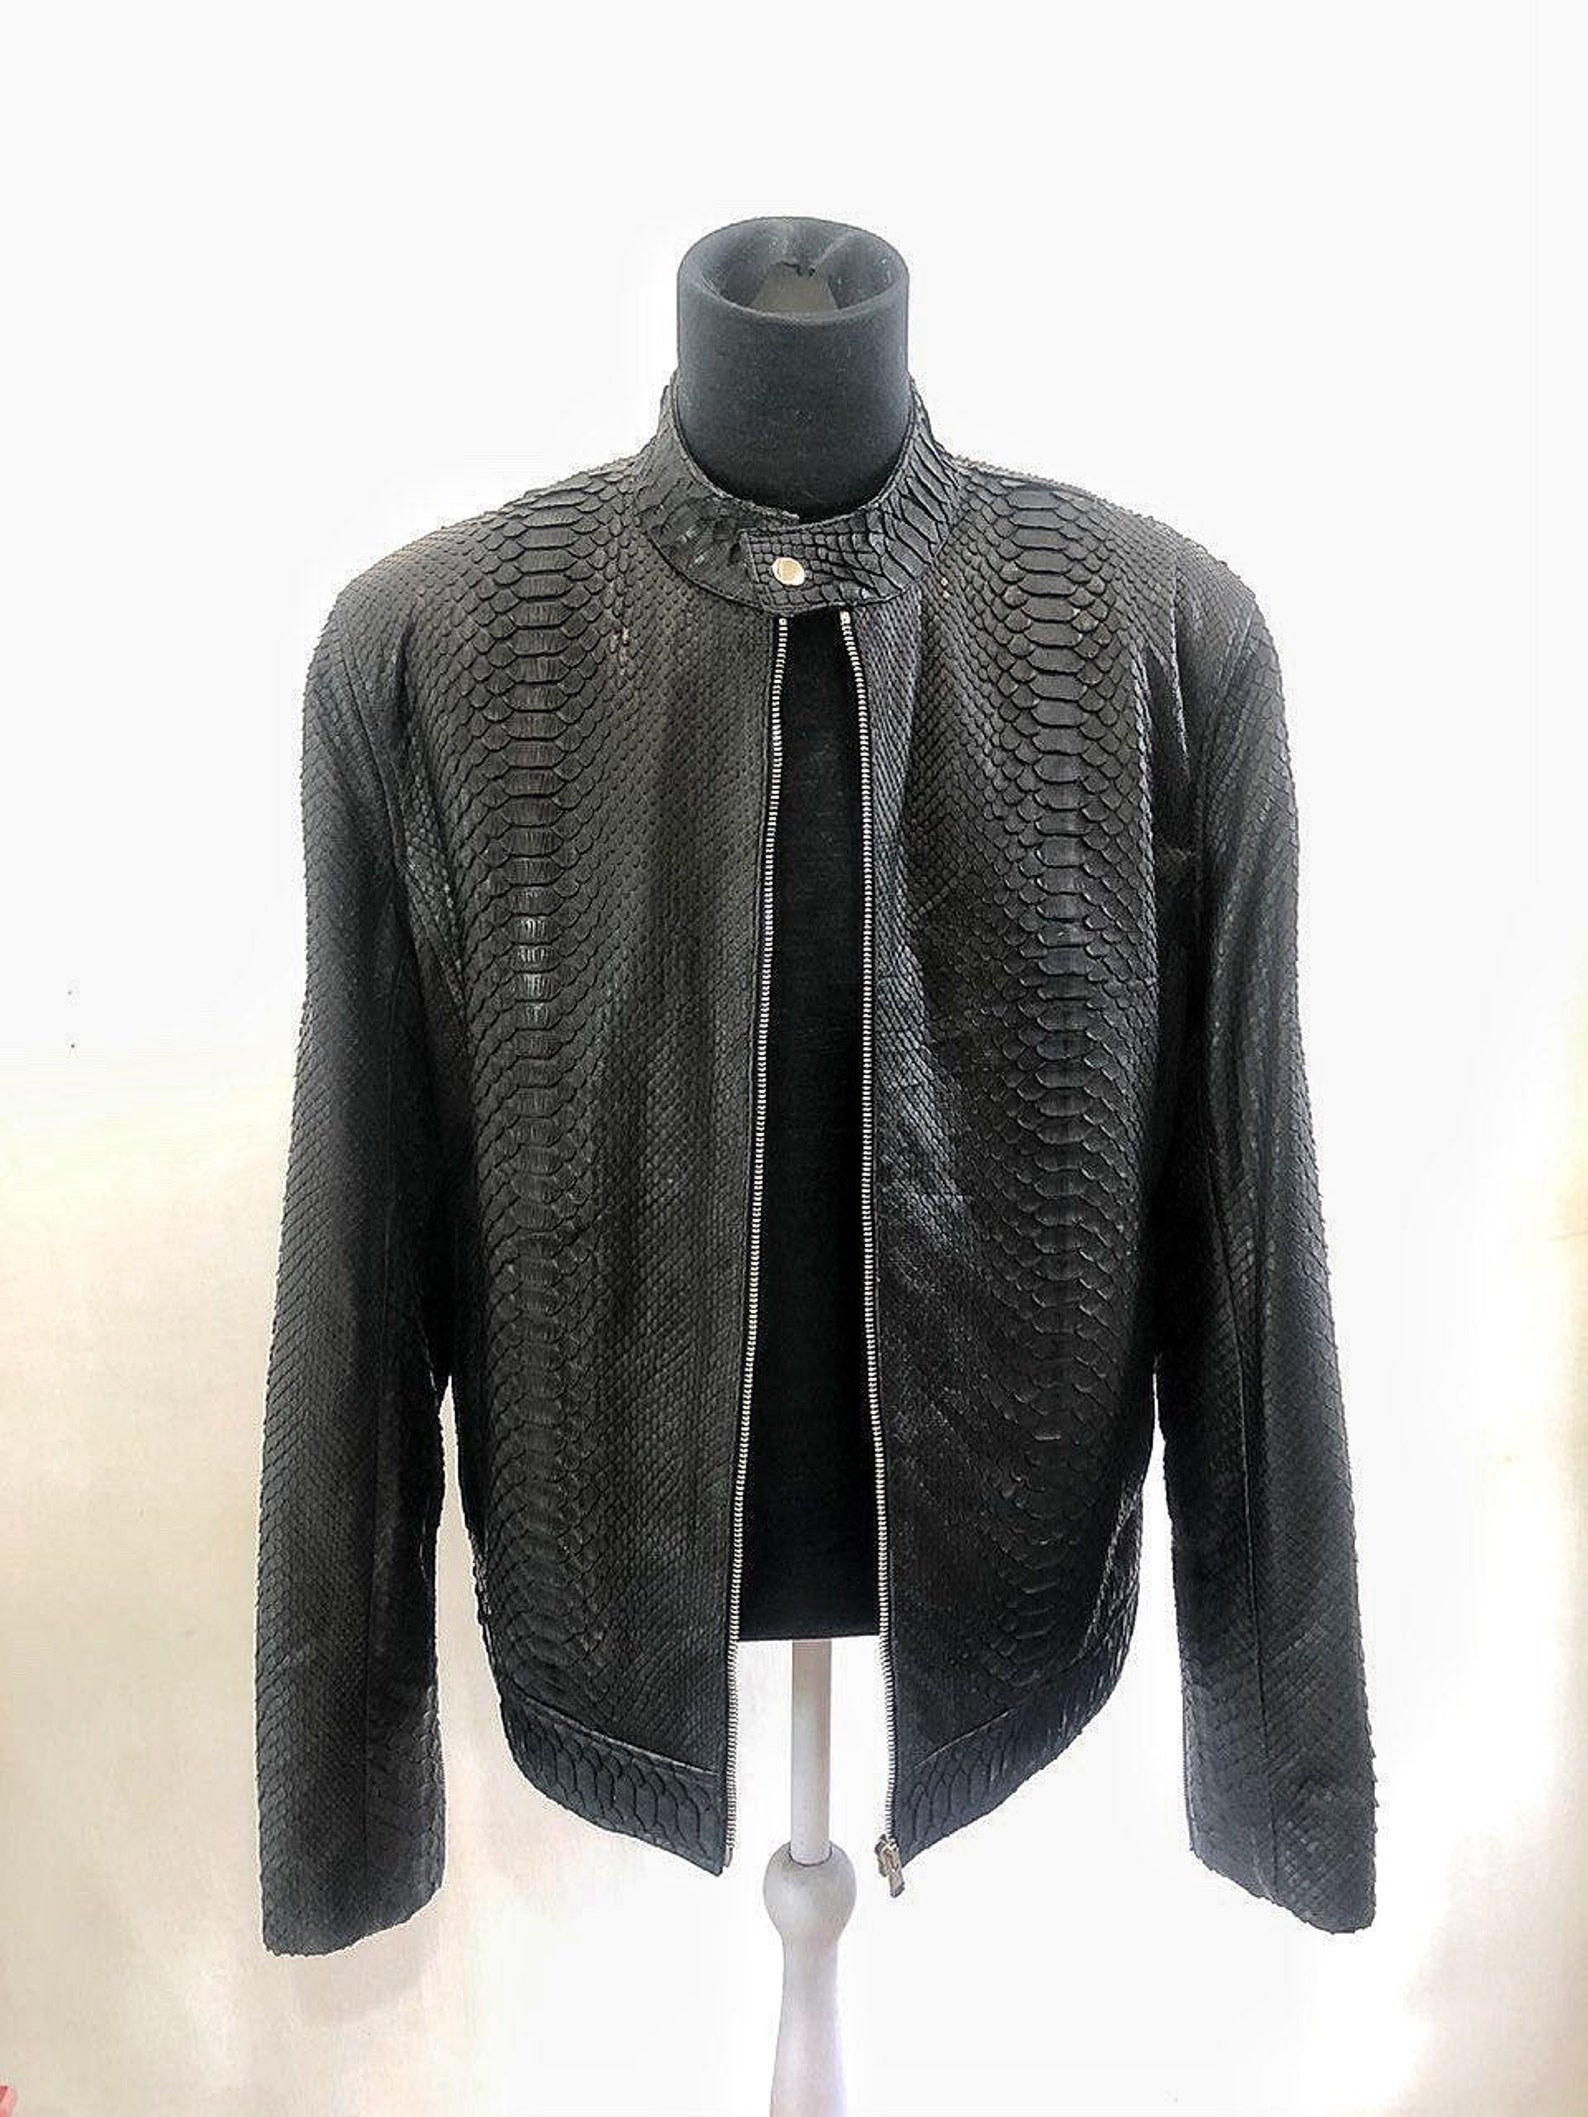 Snakeskin Jacket for Man Black Python Leather Jacket Natural - Etsy UK